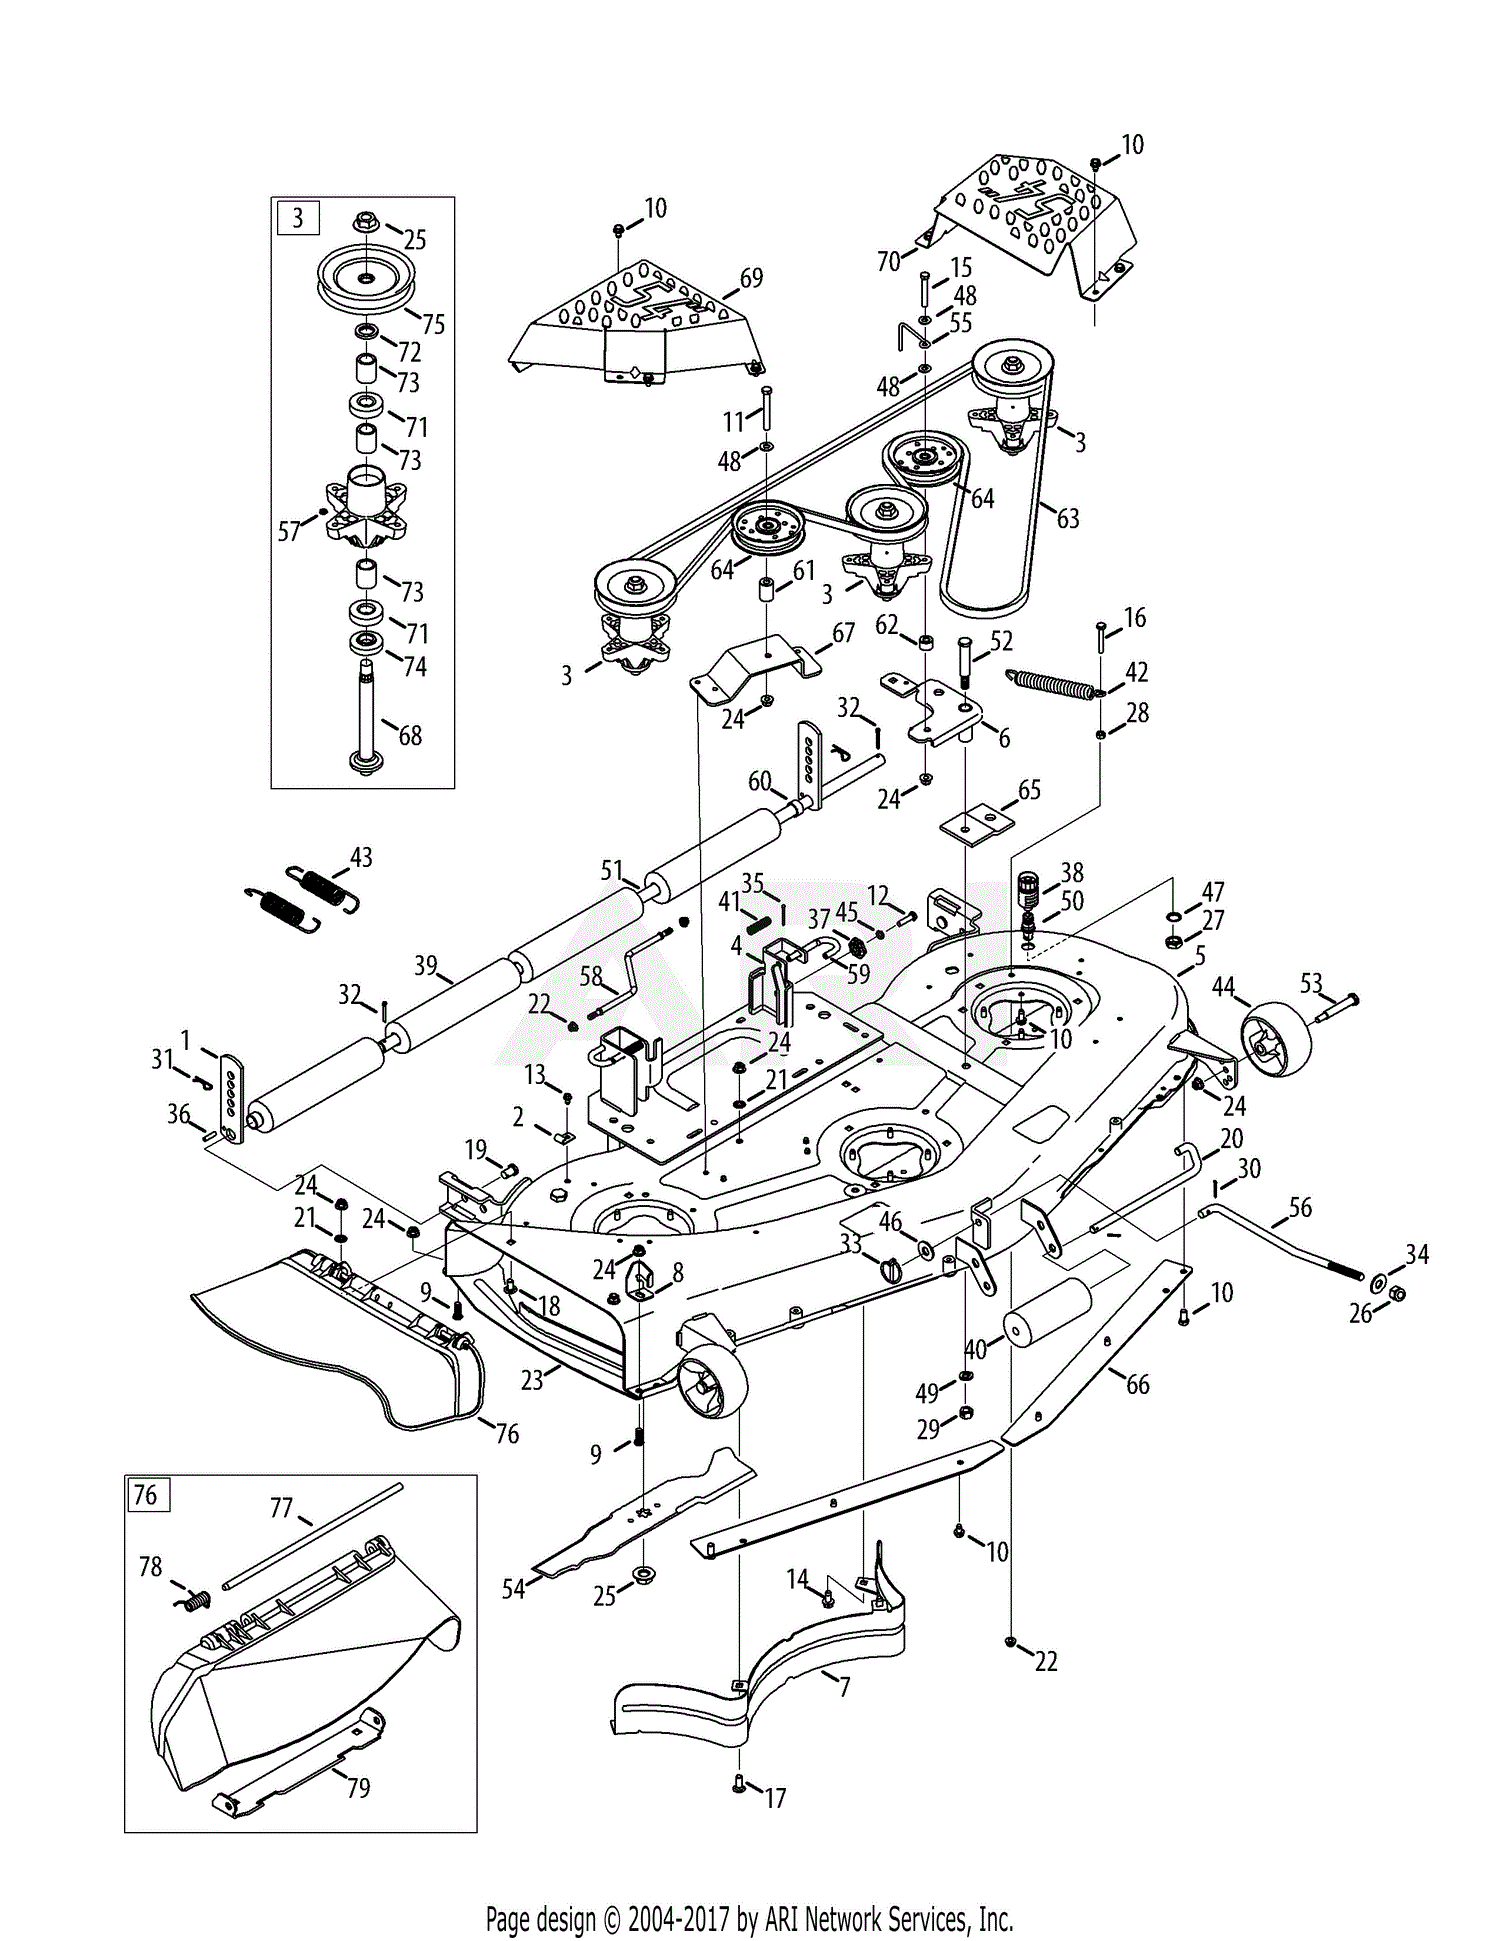 35 Craftsman 54 Mower Deck Parts Diagram Free Wiring Diagram Source